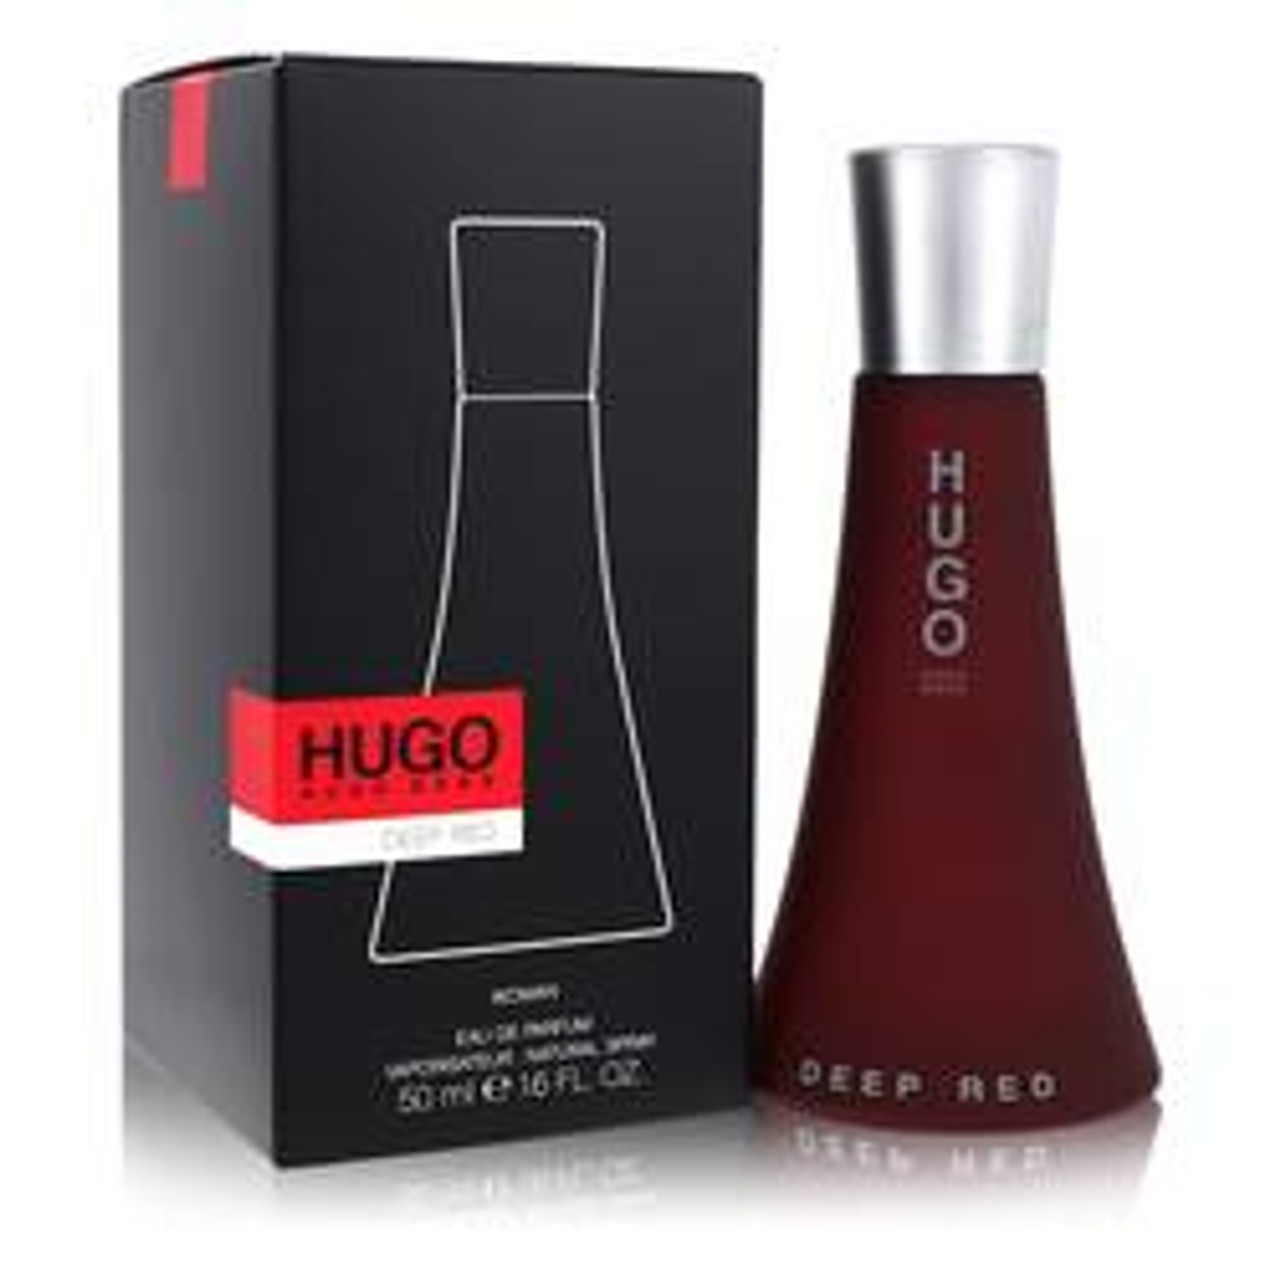 Hugo Deep Red Perfume By Hugo Boss Eau De Parfum Spray 1.6 oz for Women - [From 71.00 - Choose pk Qty ] - *Ships from Miami